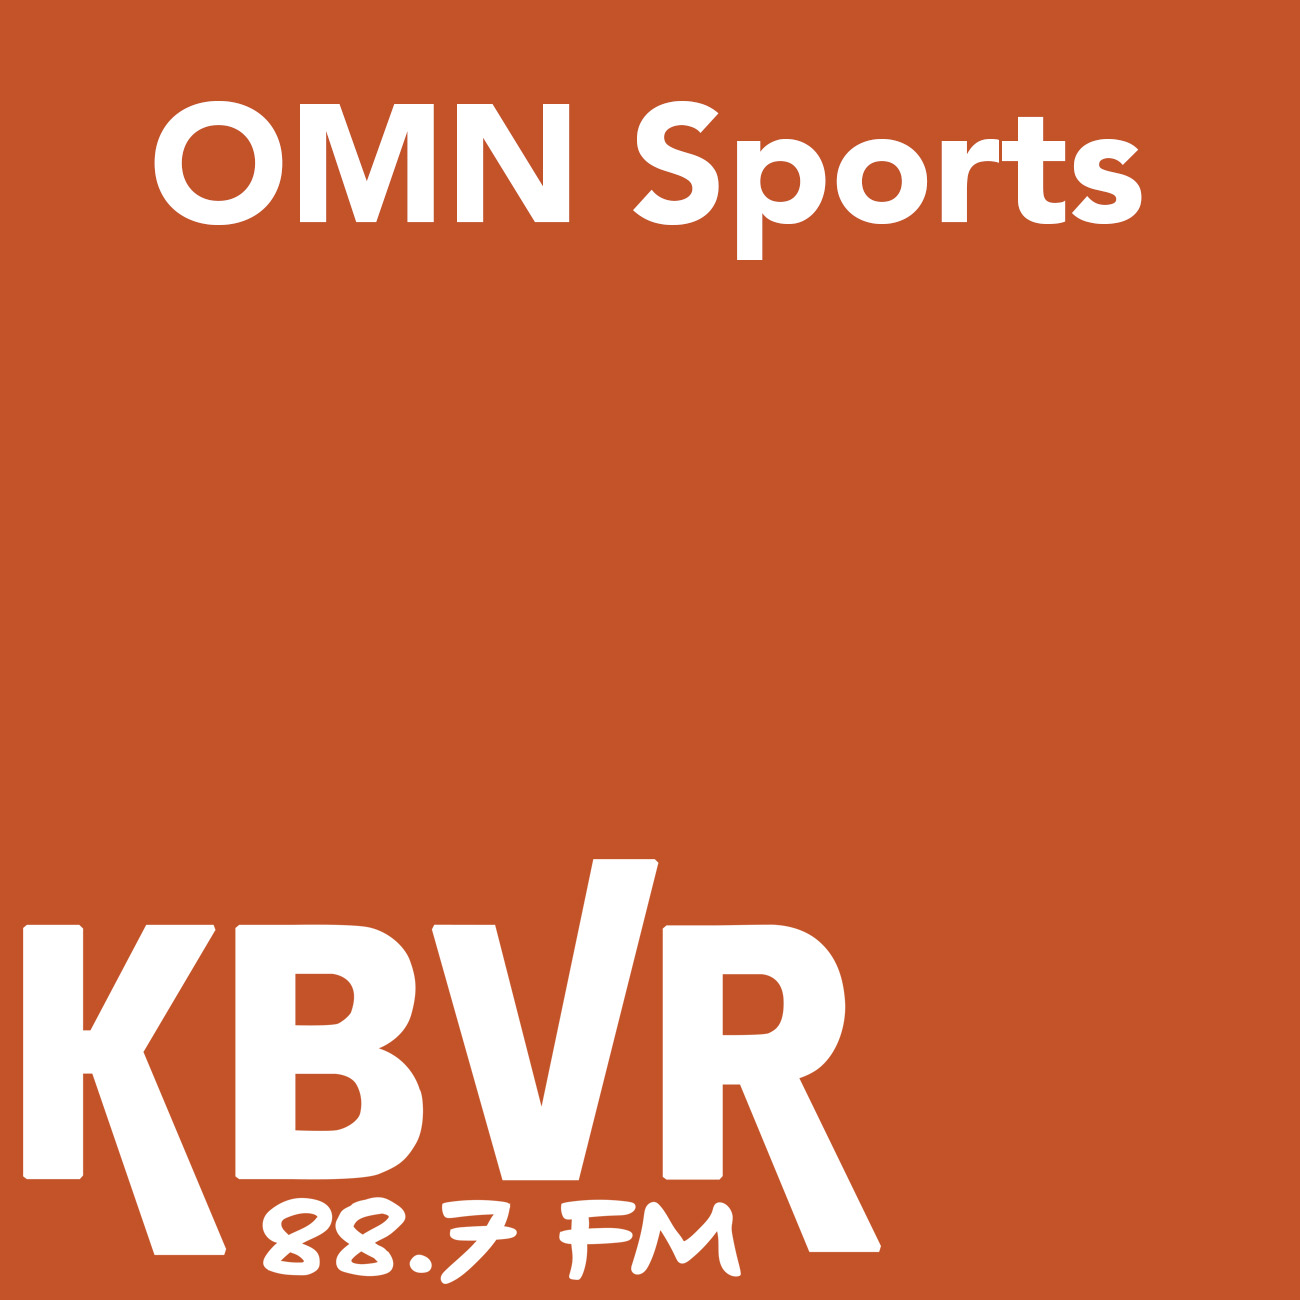 OMN+Sports+Episode+2%3A